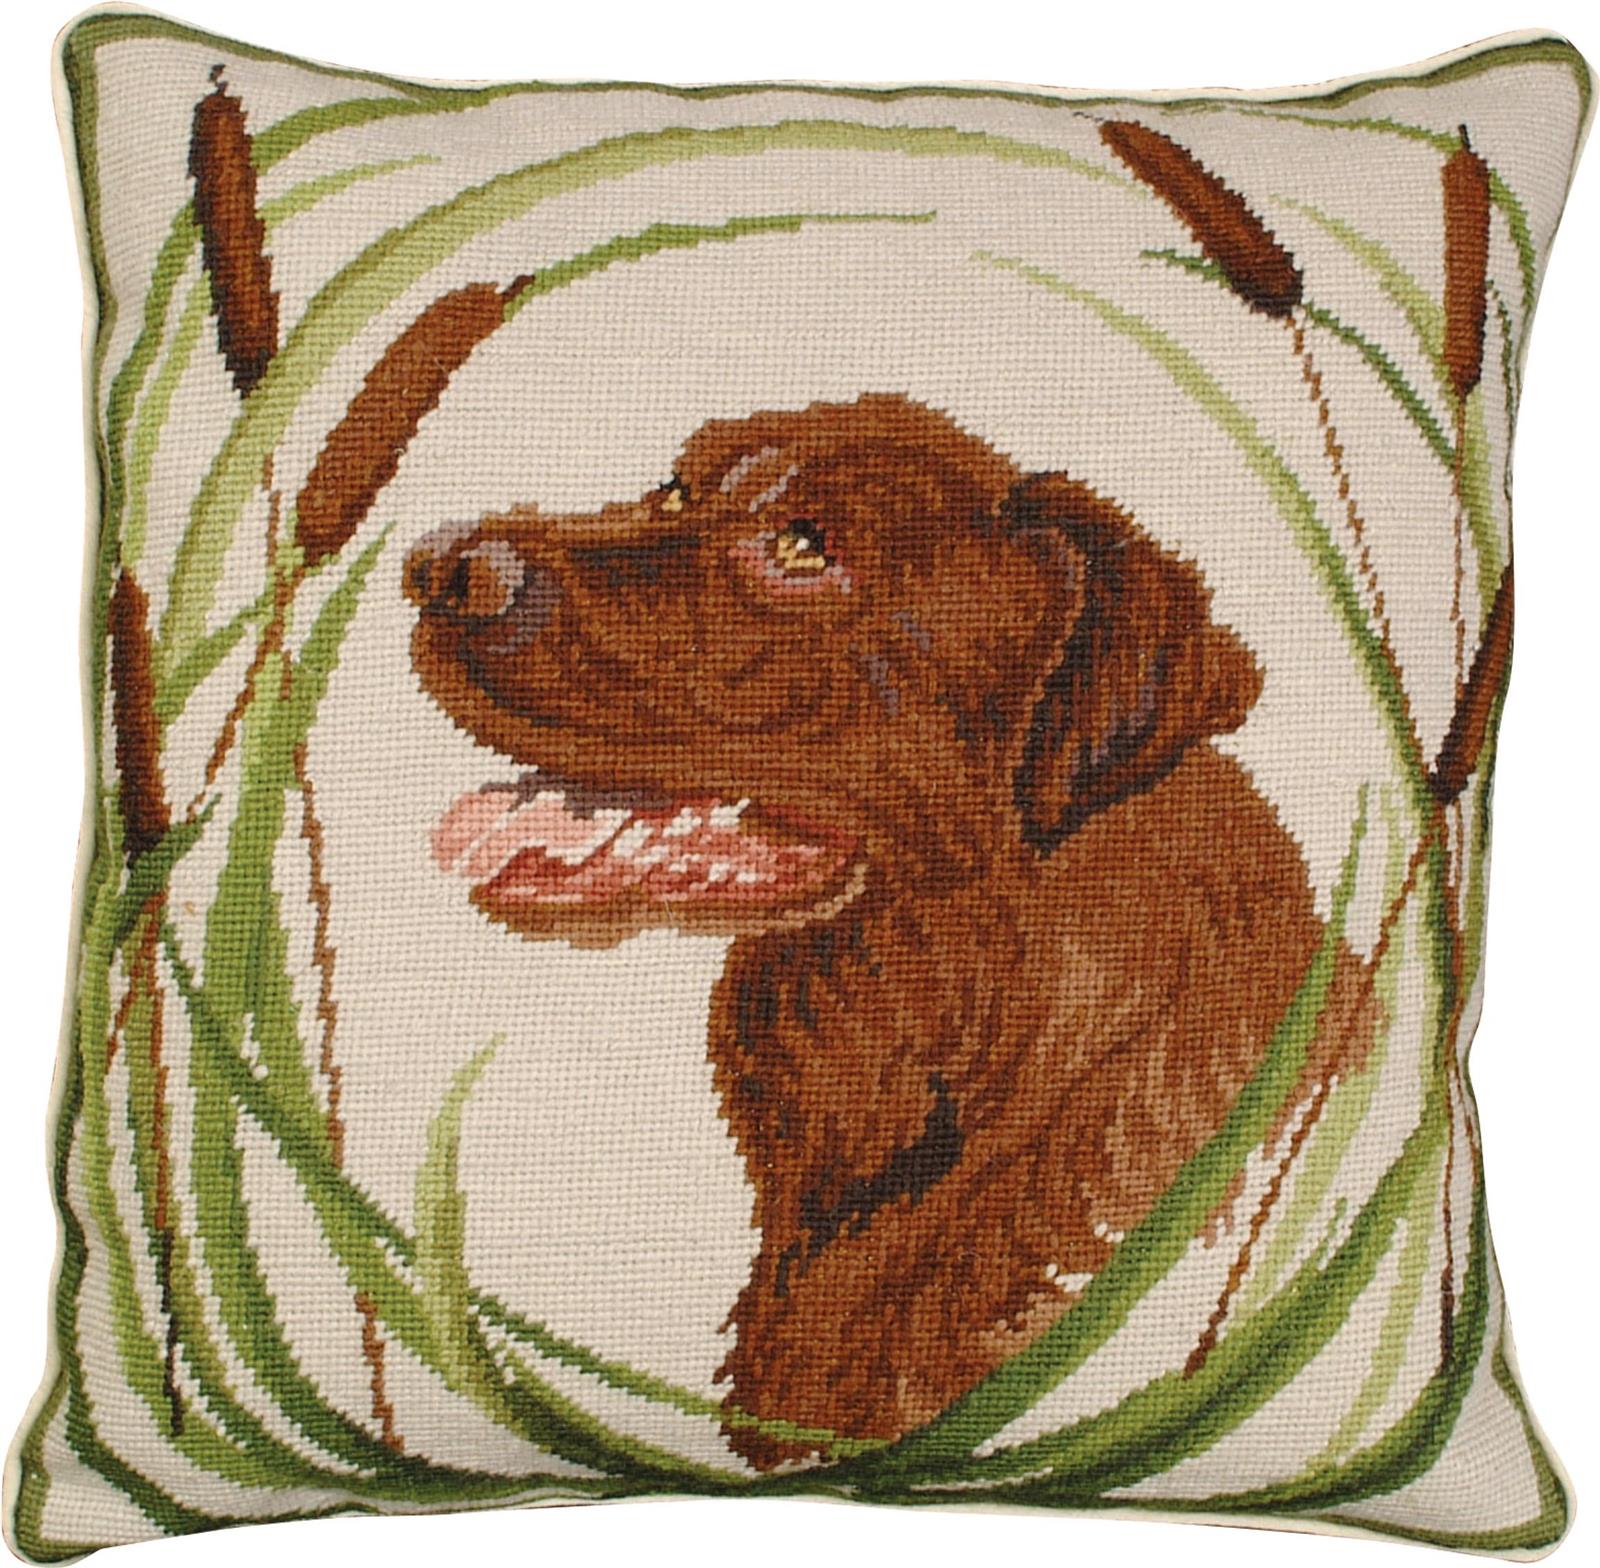 Throw Pillow Needlepoint Chocolate Lab Dog 18x18 Green Brown Wool Cotton Velvet-Image 1